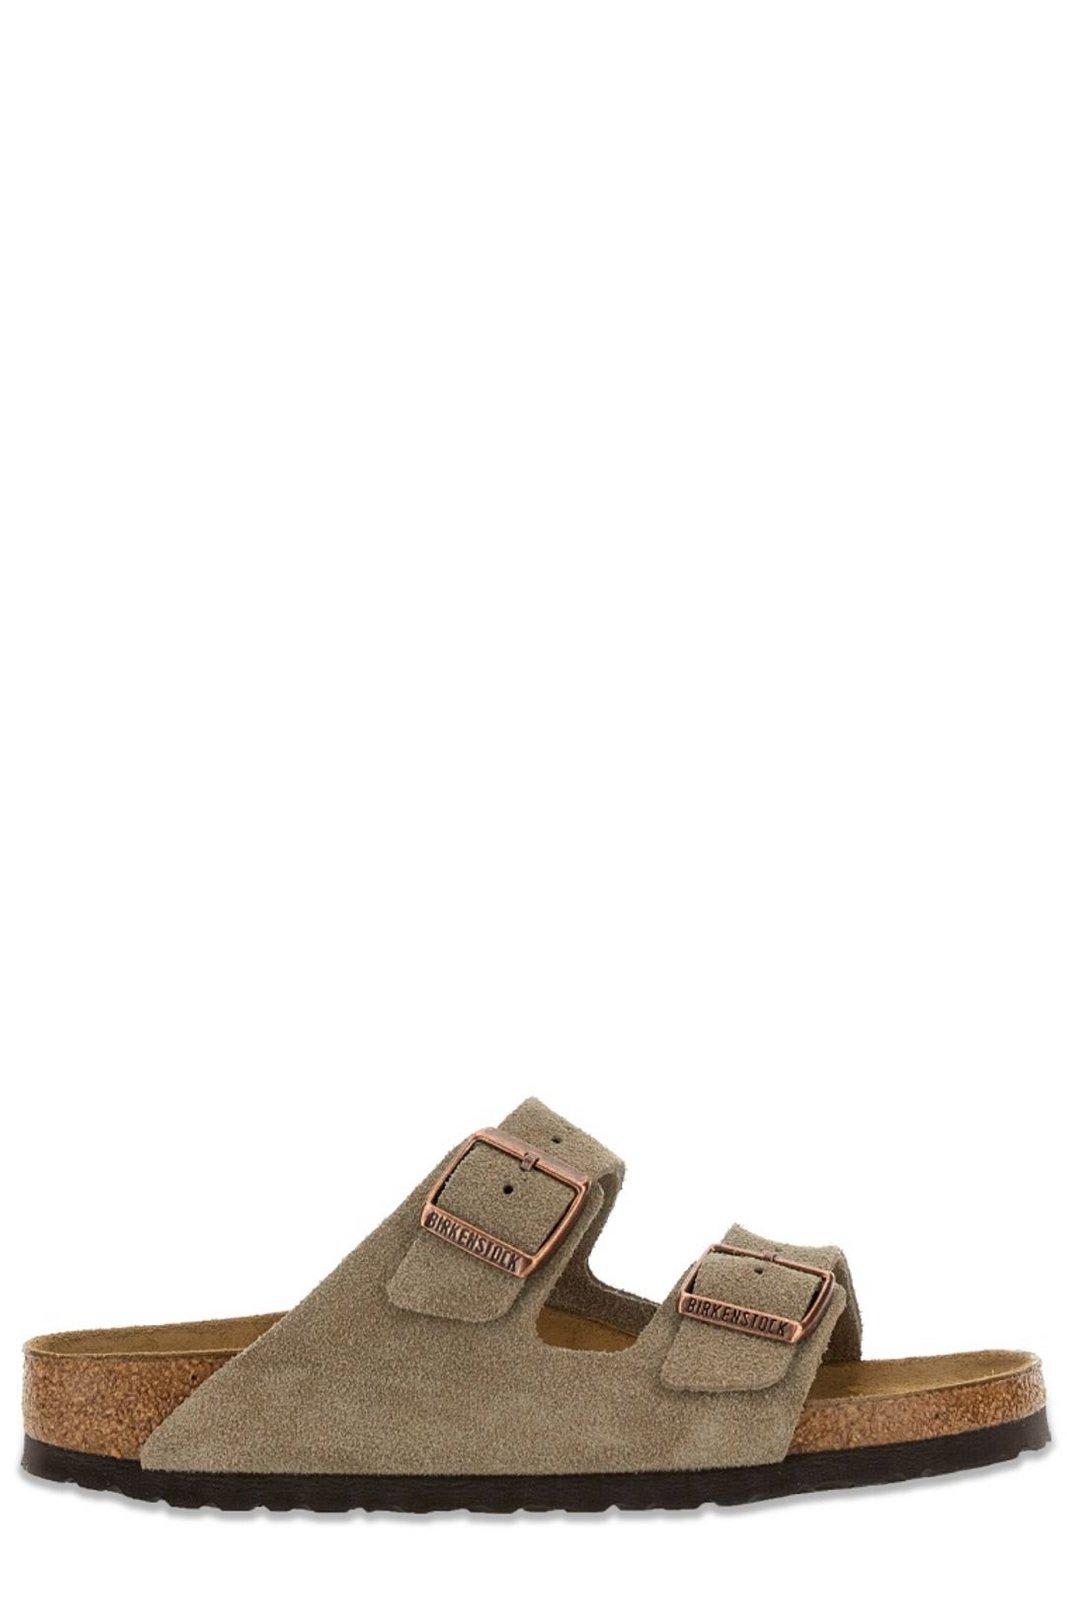 Birkenstock Side-buckle Open Toe Sandals